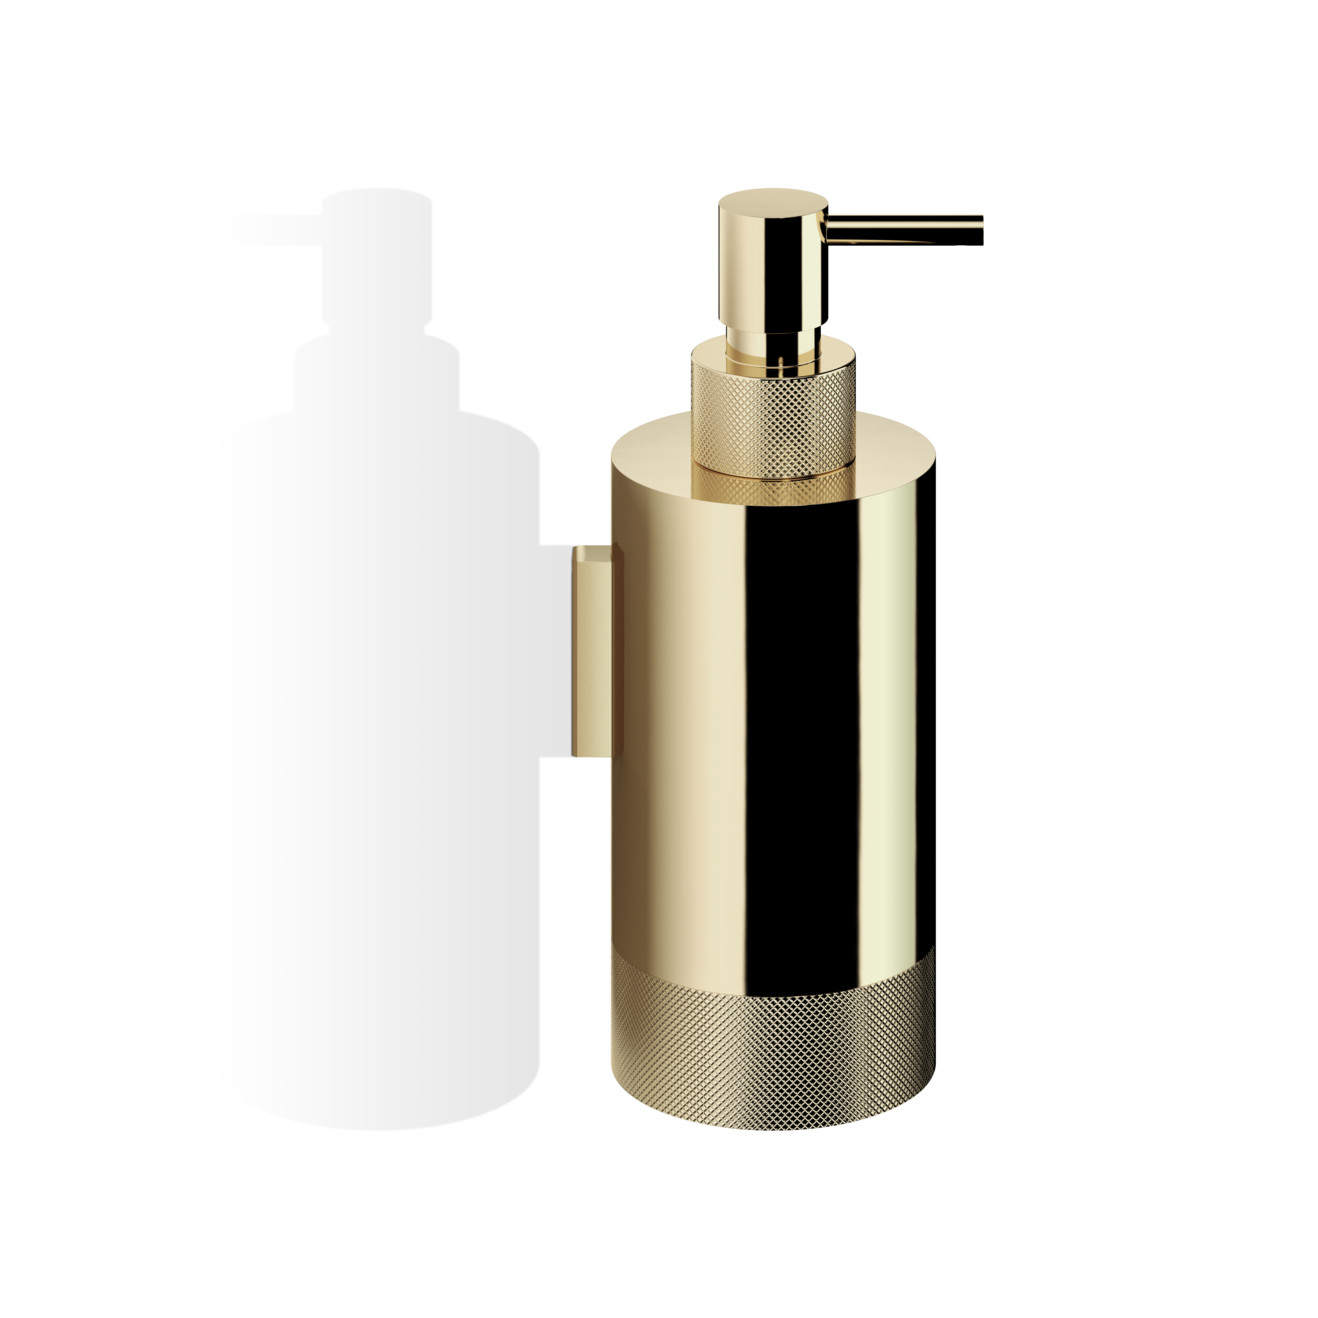 DW CLUB WSP1 Soap dispenser WM - Gold 24 Carat / Gold 24 Carat